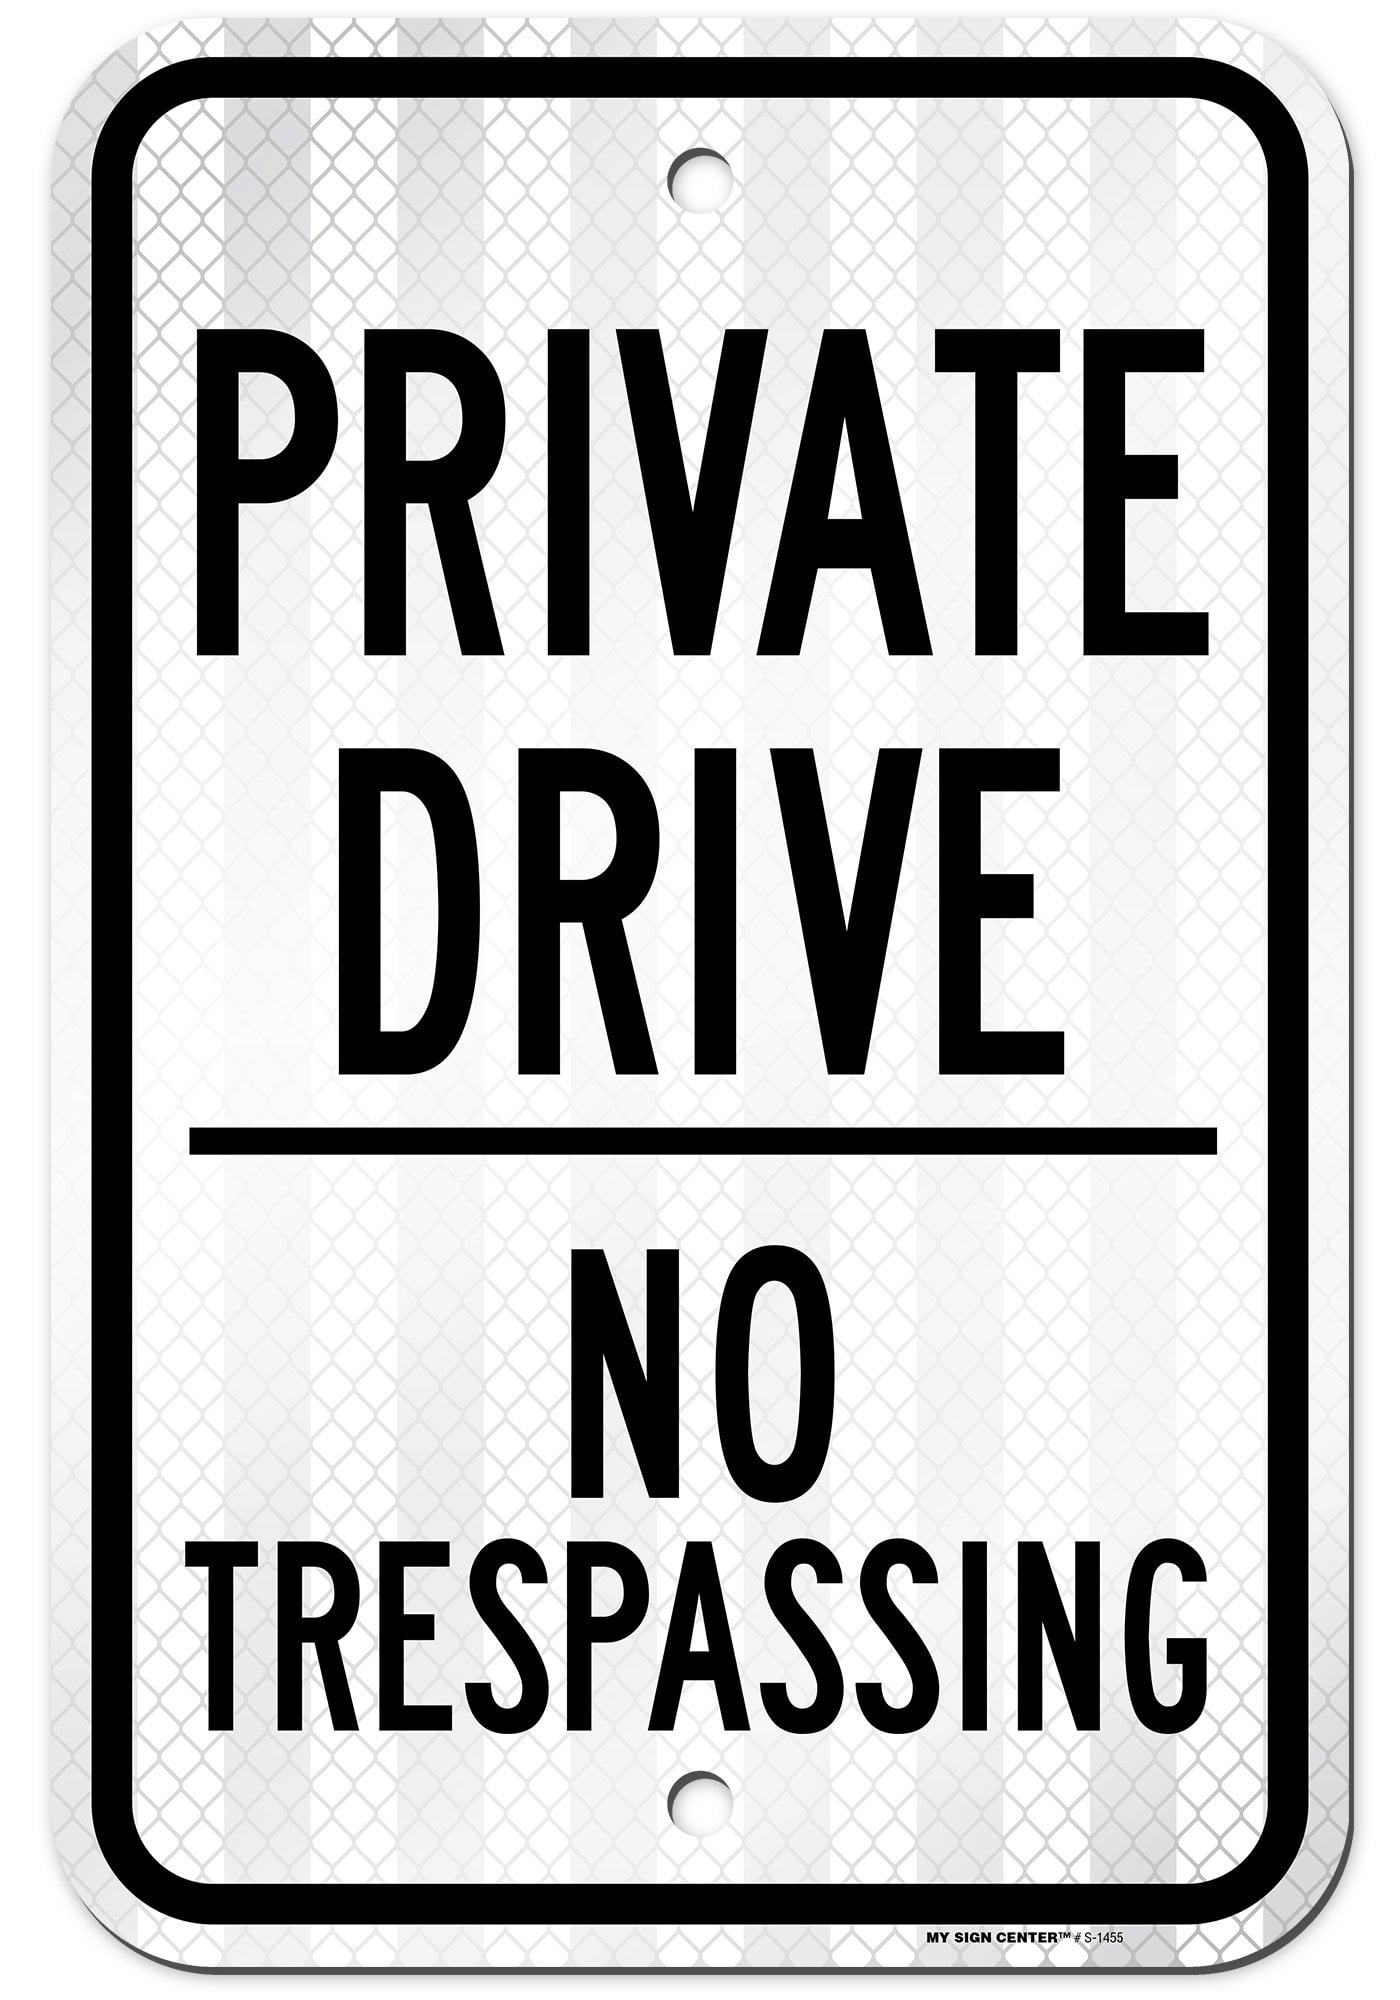 ATTENTION PRIVATE ROAD NO TRESPASSING Metal Aluminum composite sign 